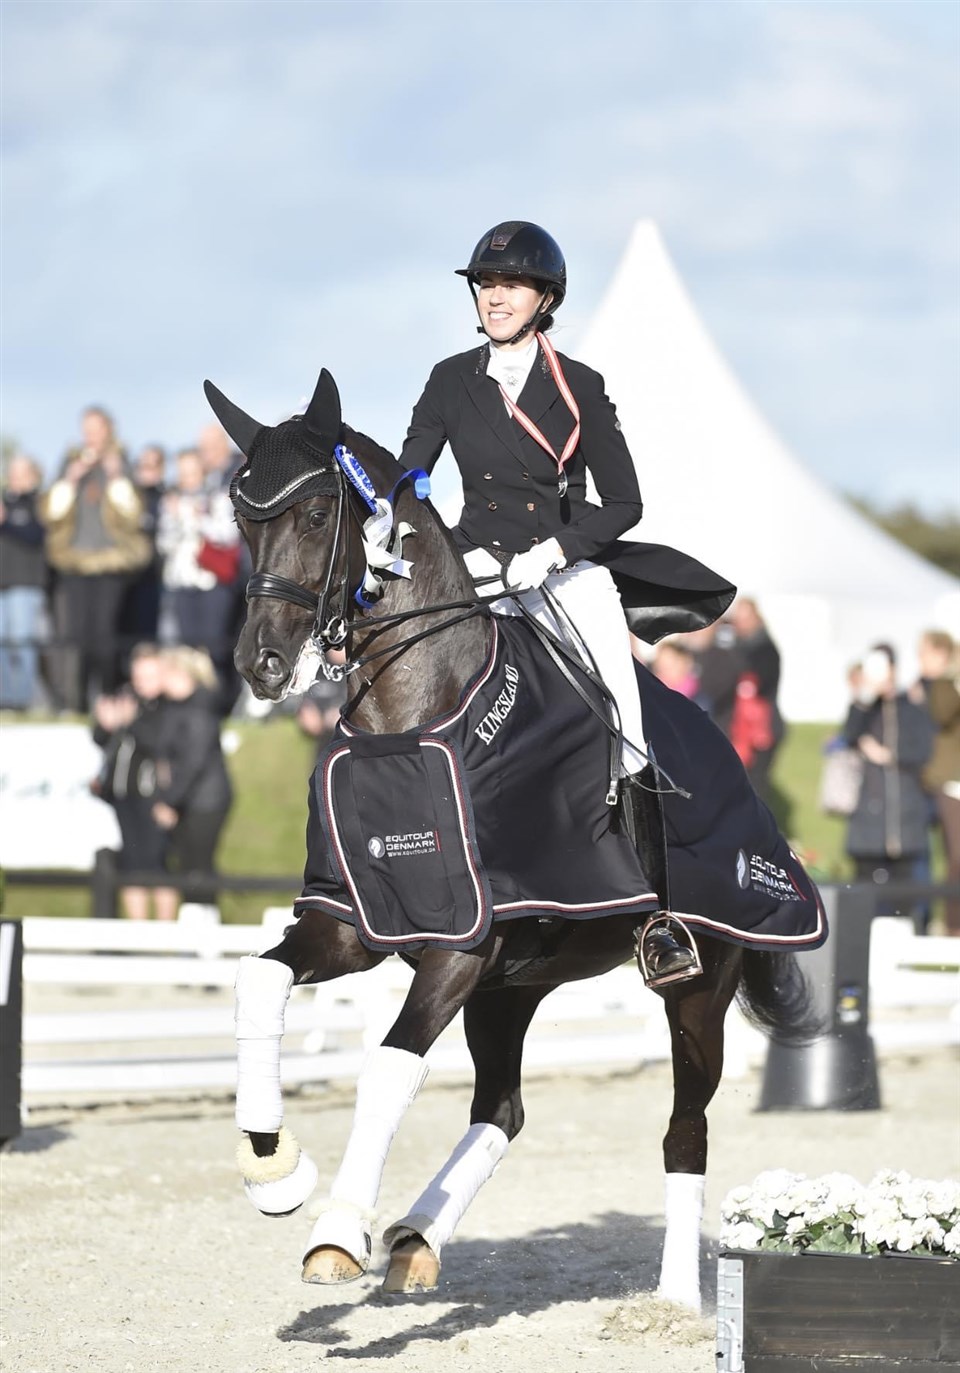 Carina Cassøe Krüth sølvmedalje tager til DM Dressur 2020